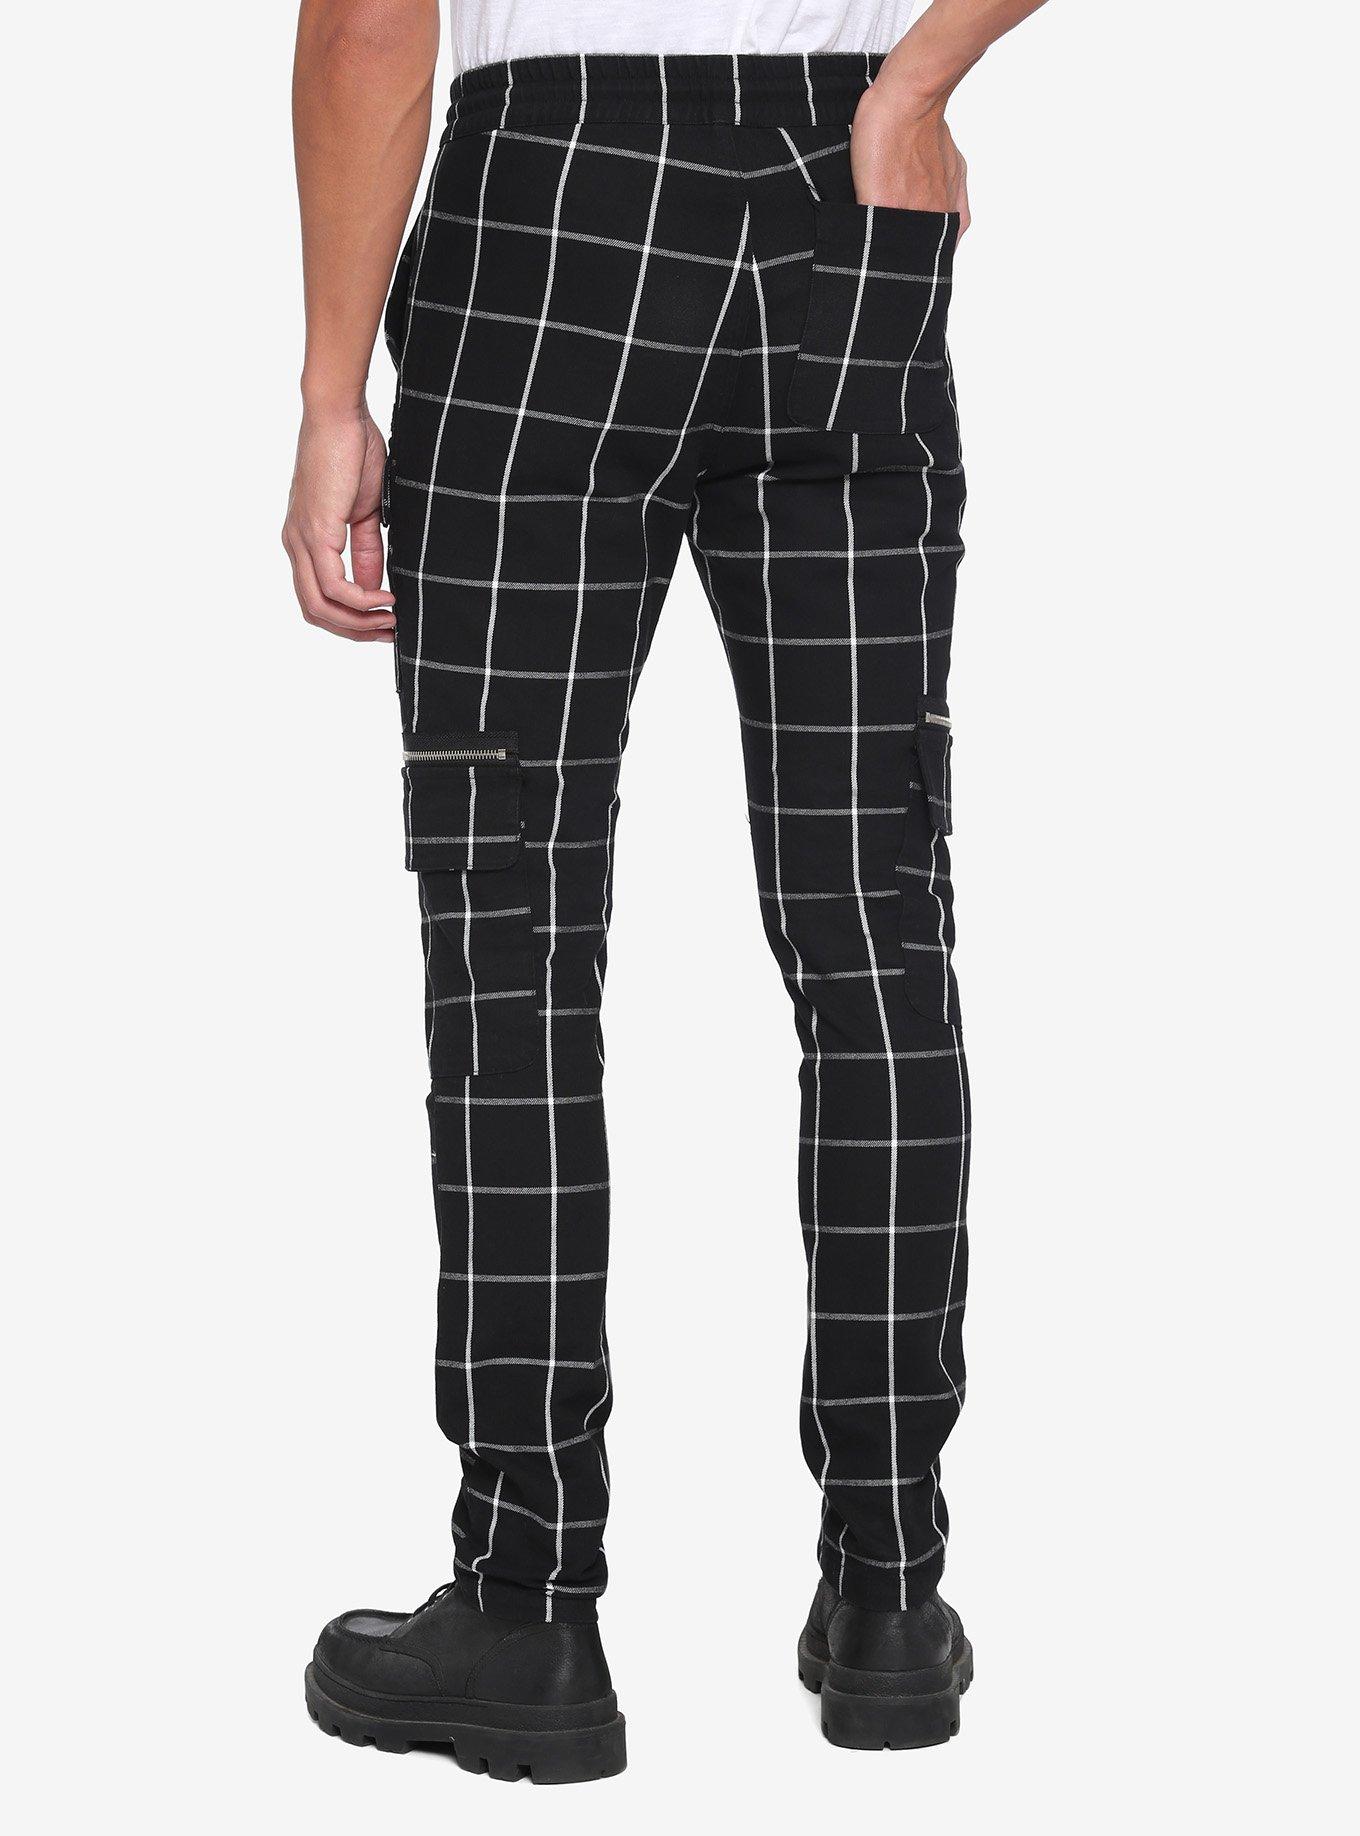 Black & White Grid Cargo Jogger Pants, BLACK, alternate